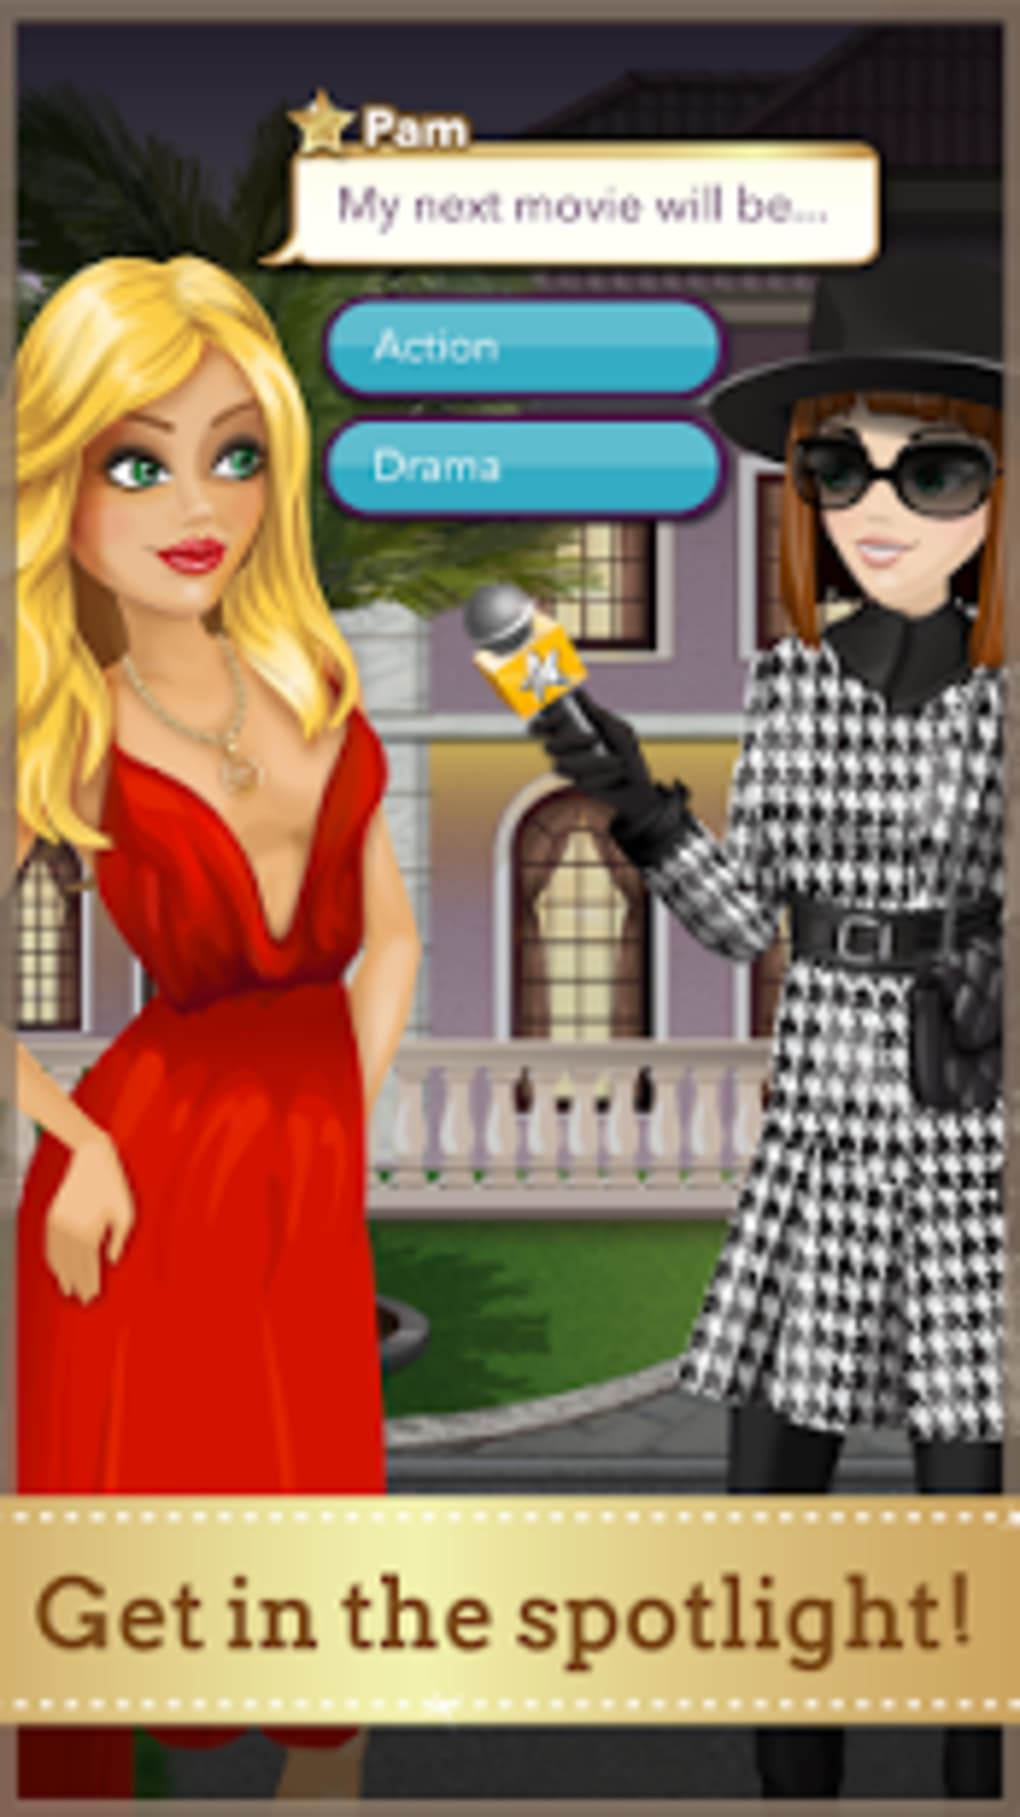 Hollywood Story®: Fashion Star – Apps no Google Play